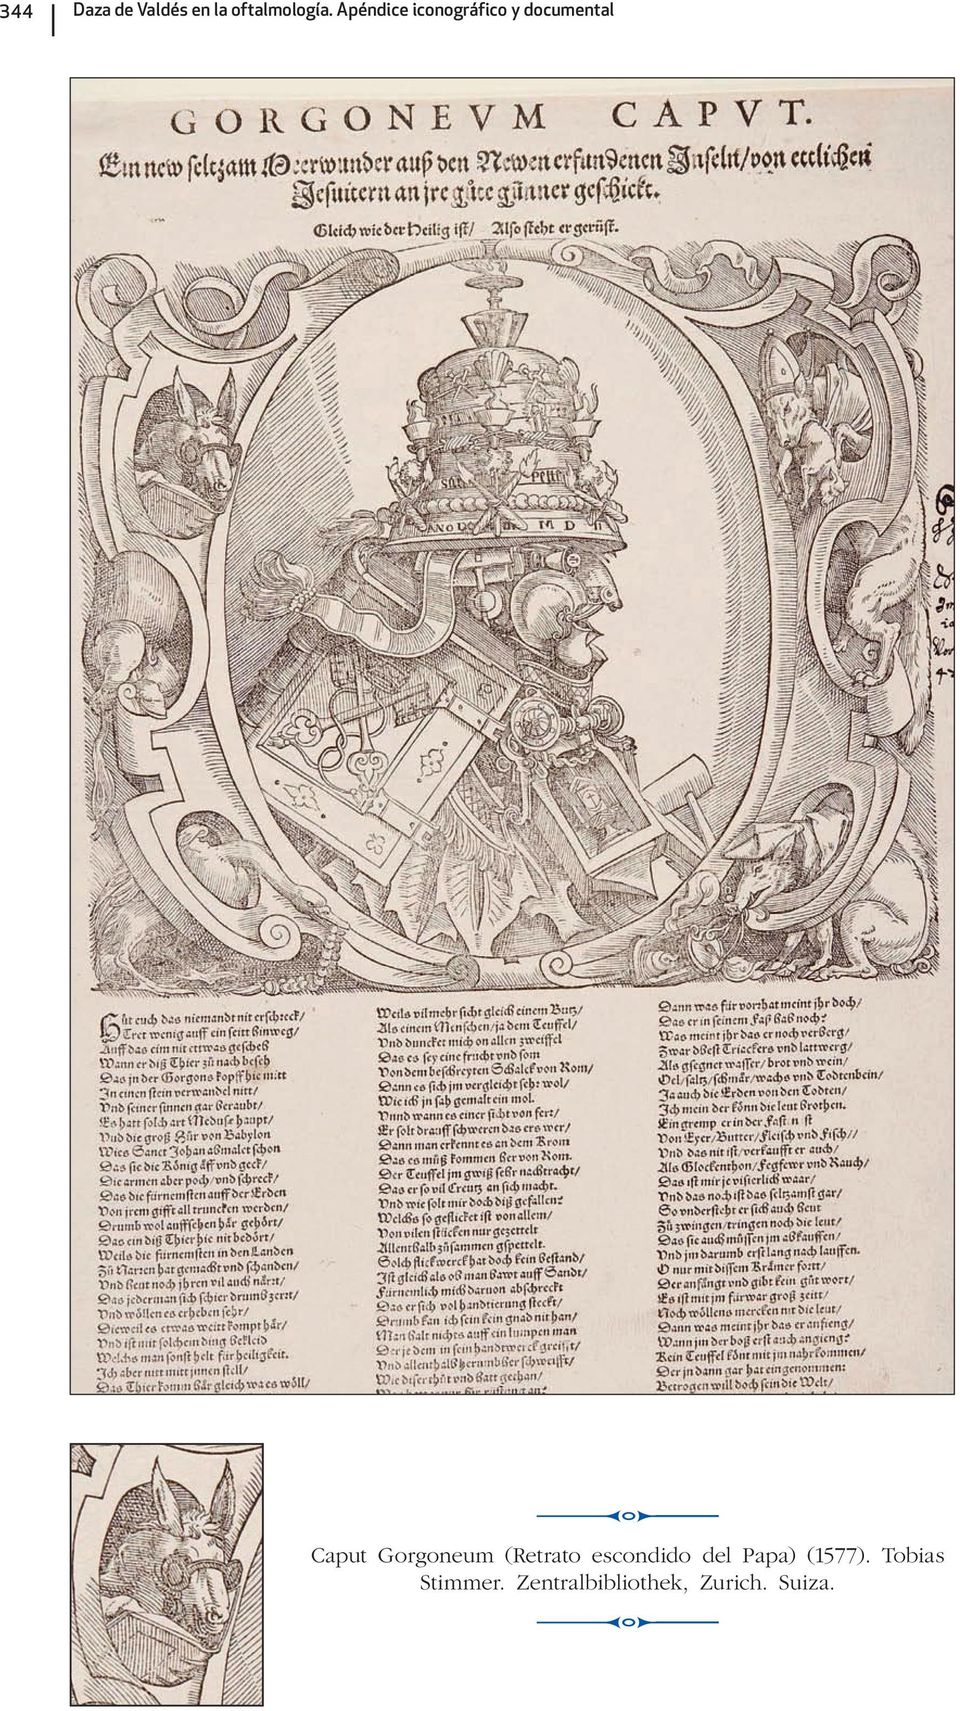 Gorgoneum (Retrato escondido del Papa)